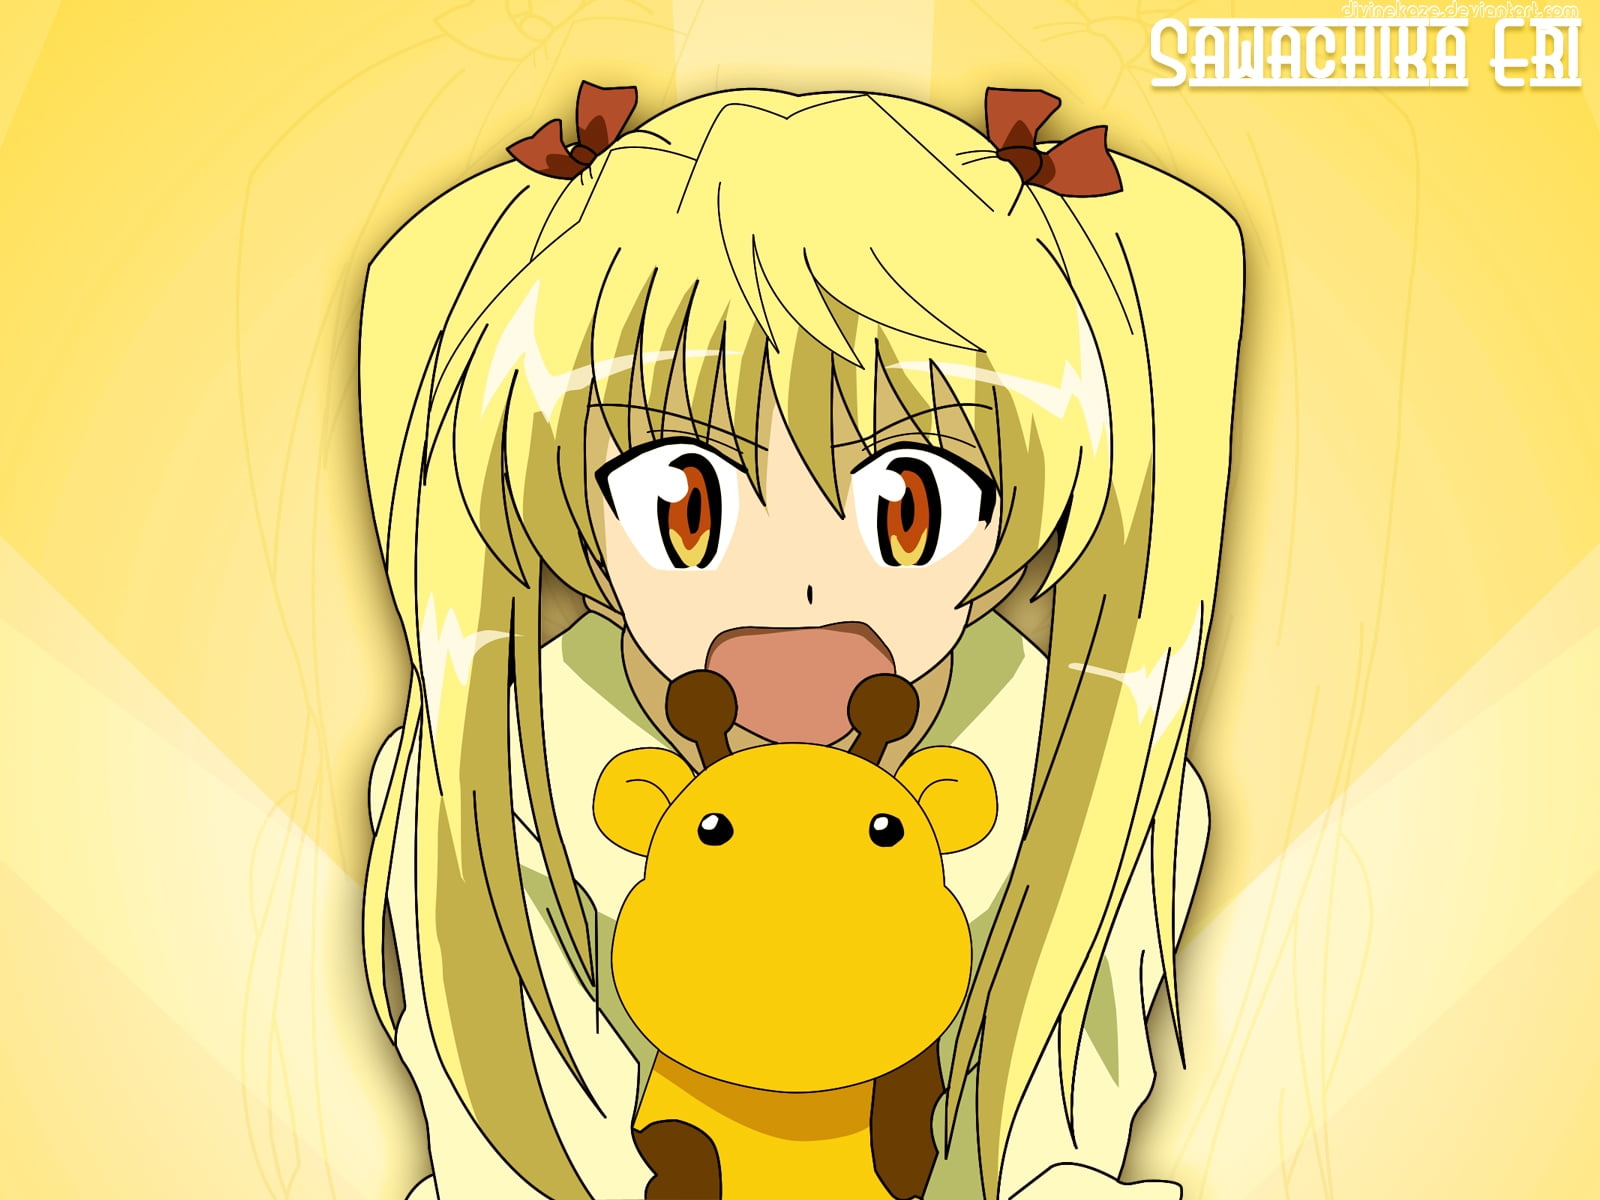 blonde anime girl holding giraffe plush toy graphic illustration